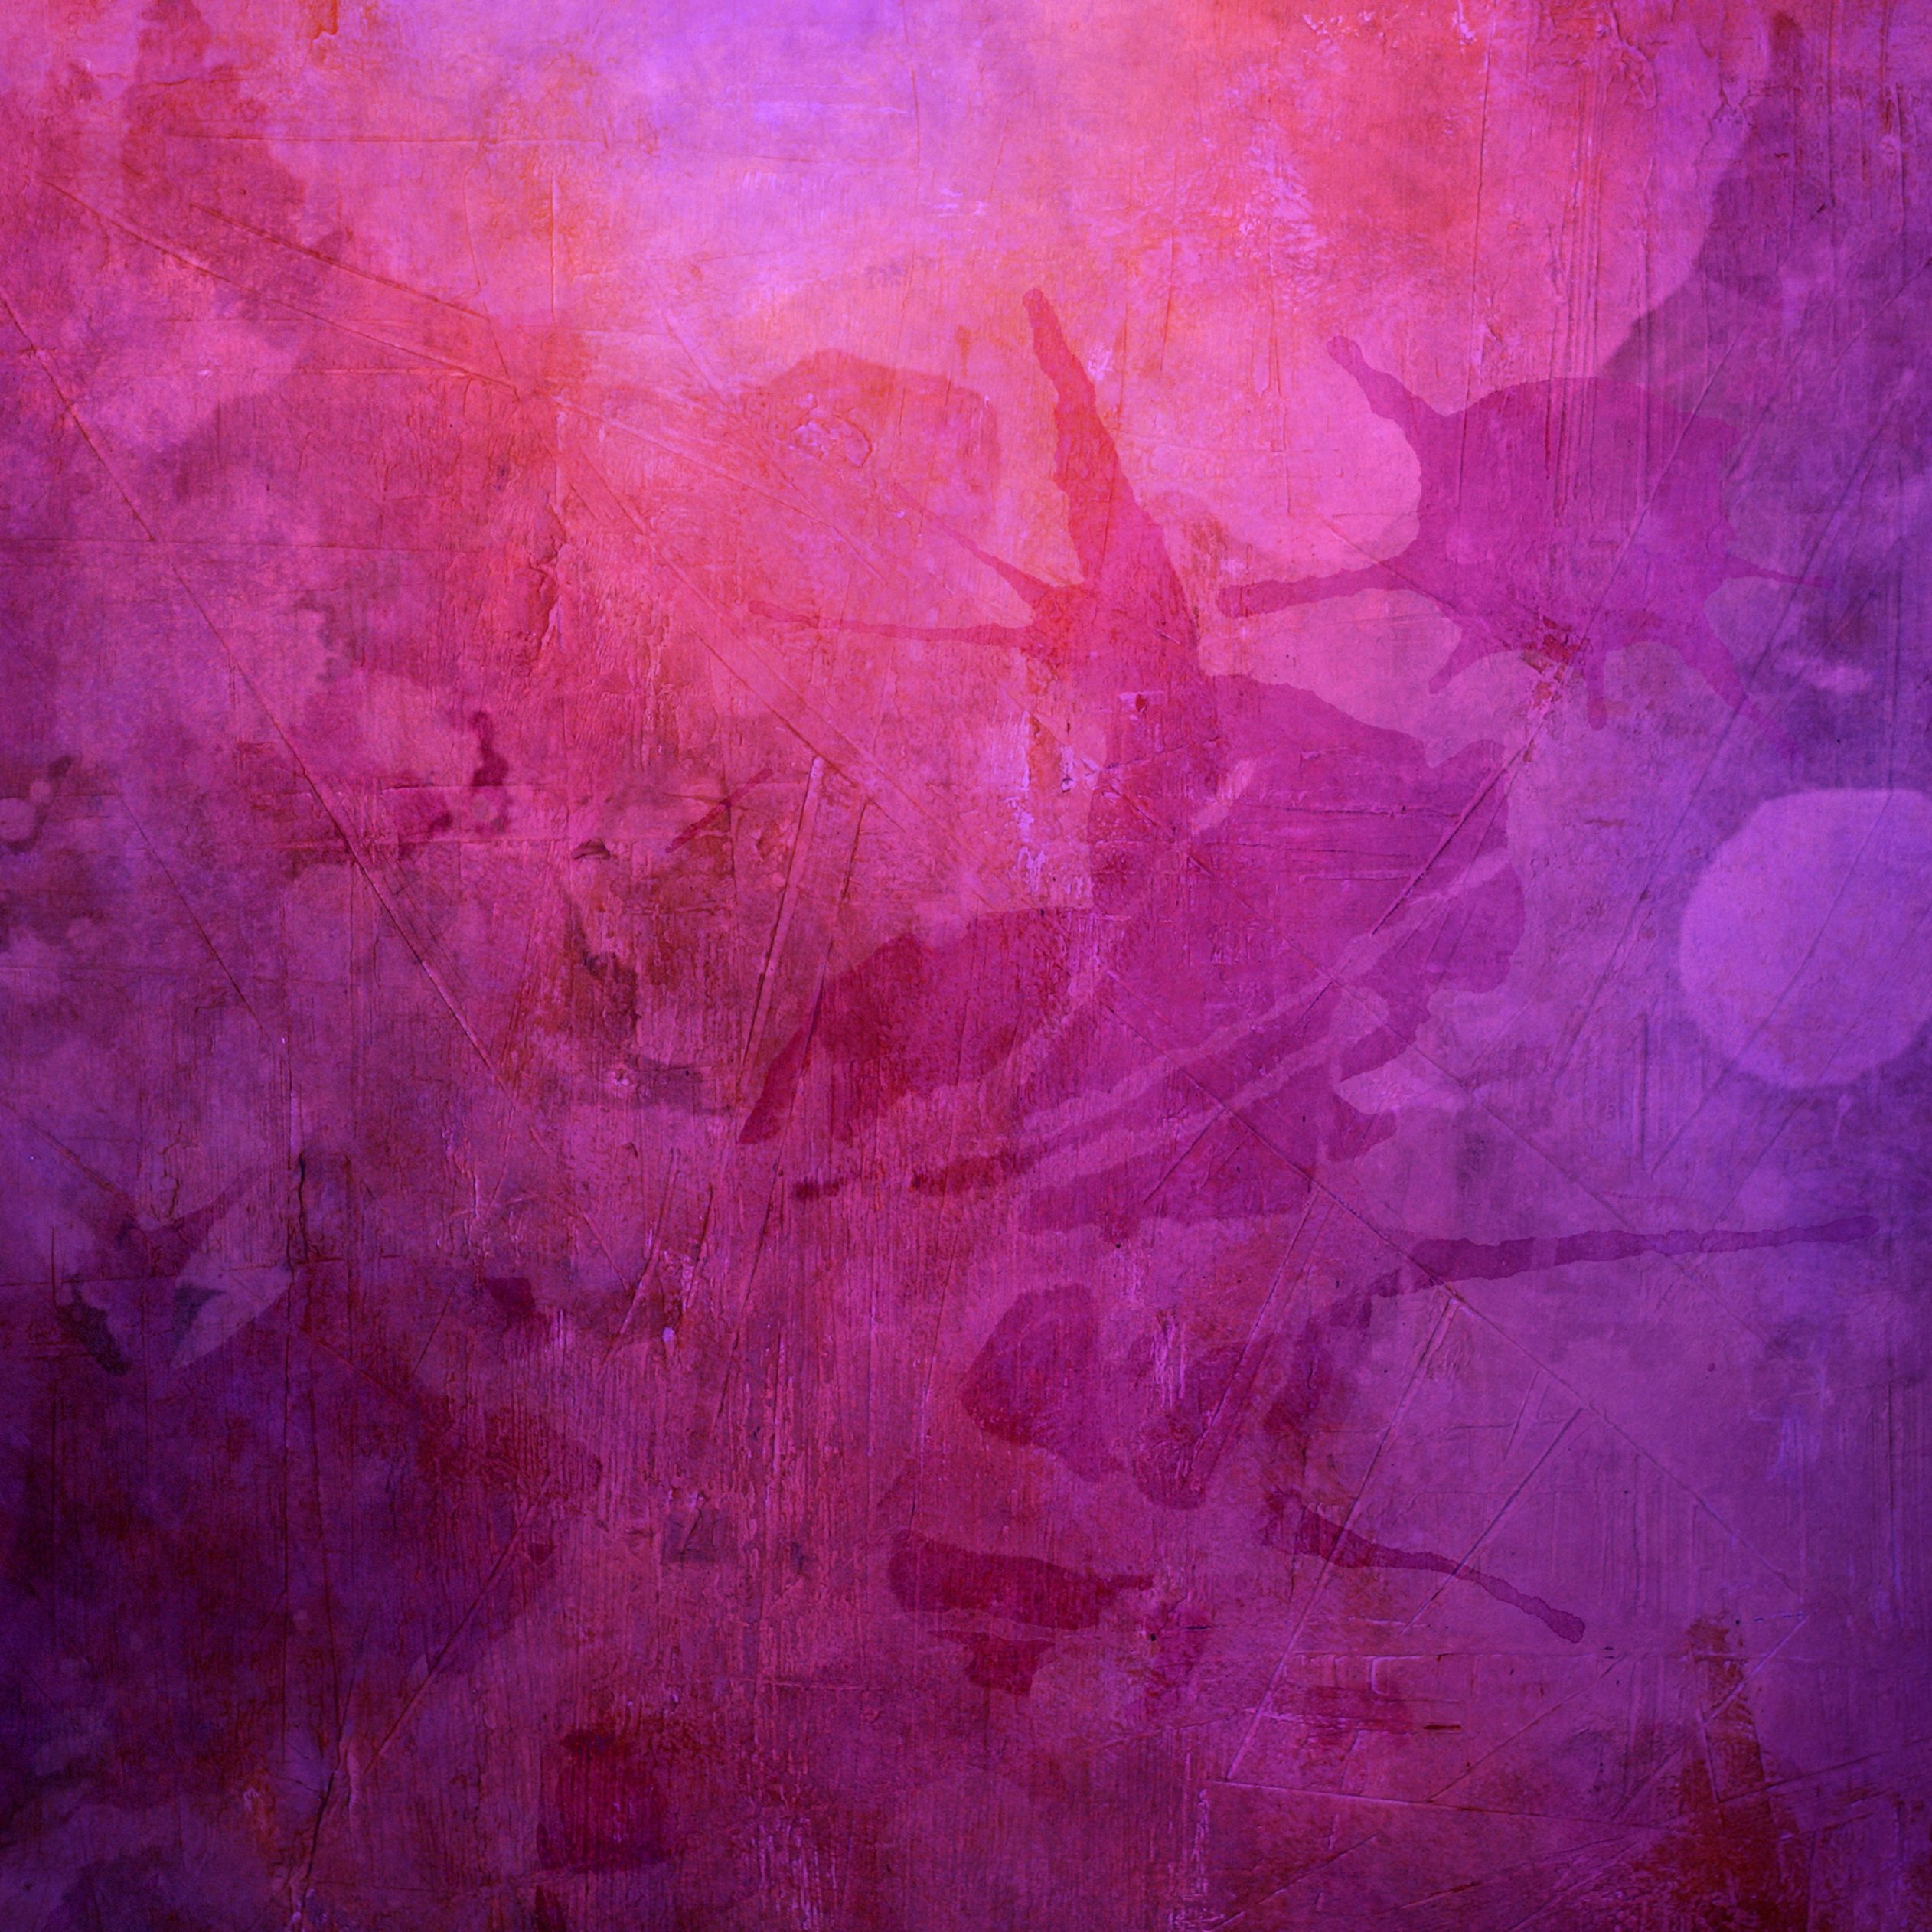 2524x2524 Parallax wallpaper 4k Purple Watercolor Painting iPad Wallpaper 2524x2524 pixels resolution